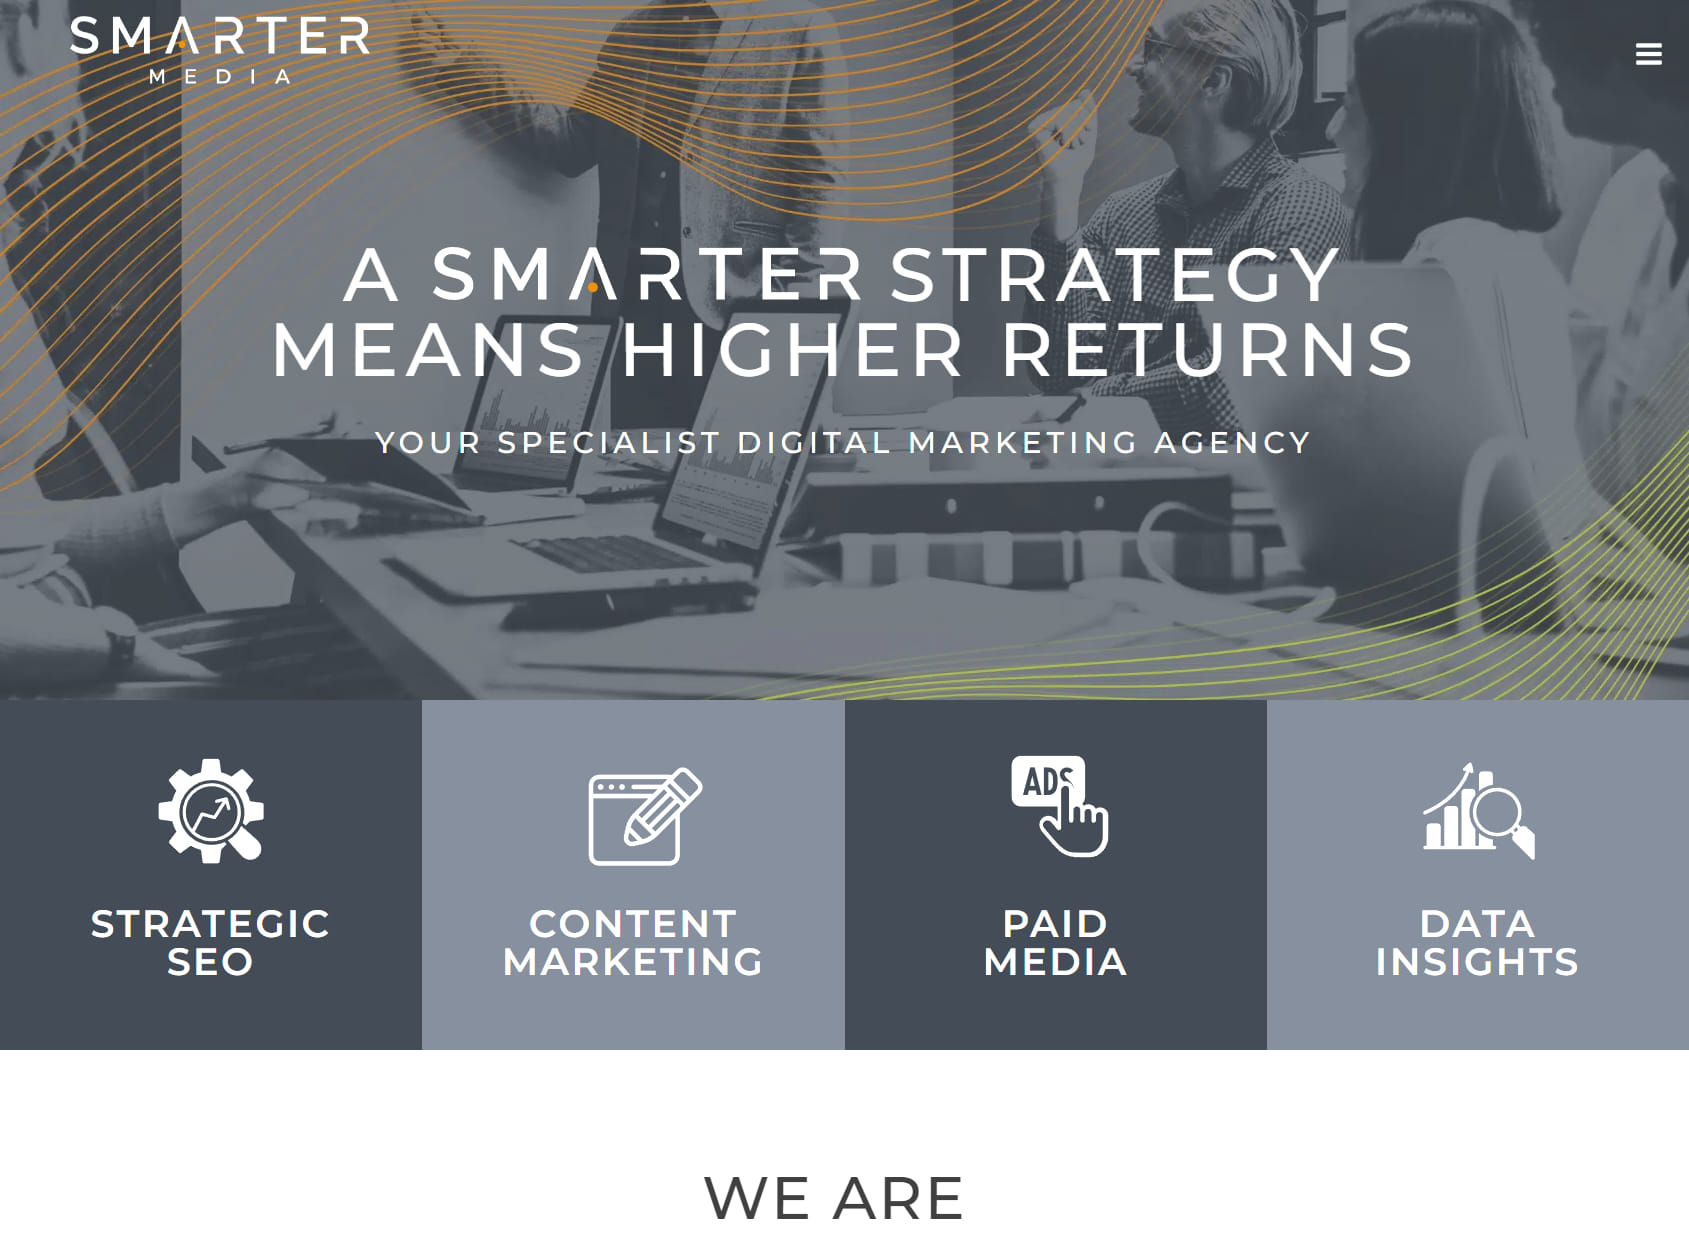 Smarter Media Ltd